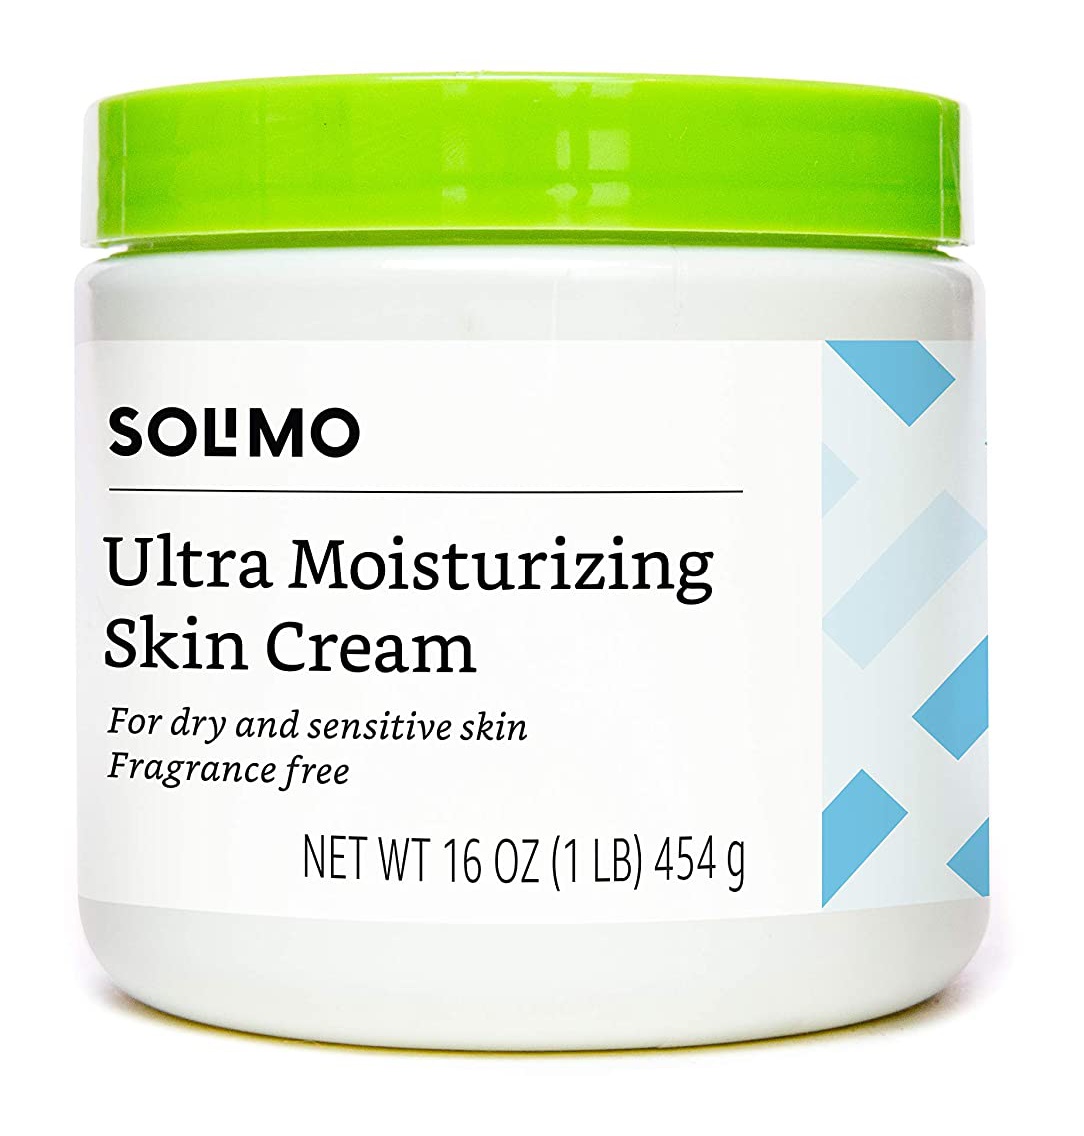 Solimo Ultra Moisturizing Skin Cream